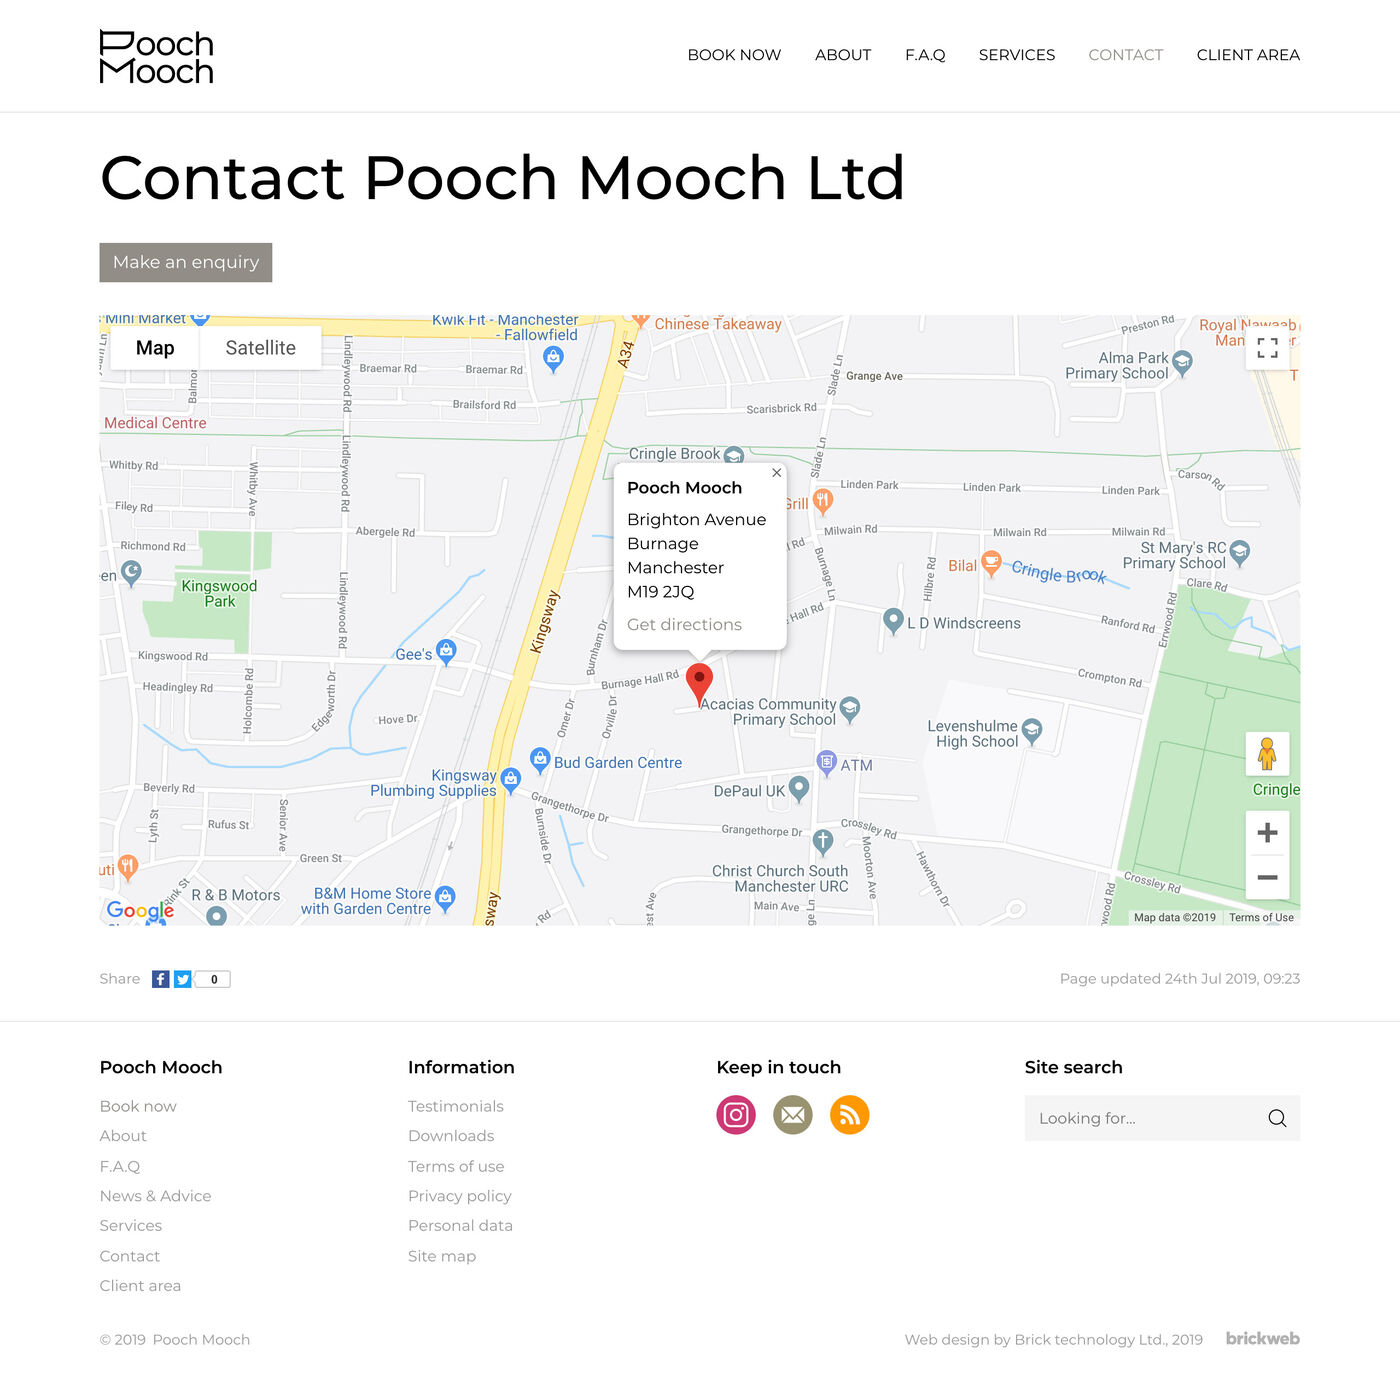 Pooch Mooch Contact us